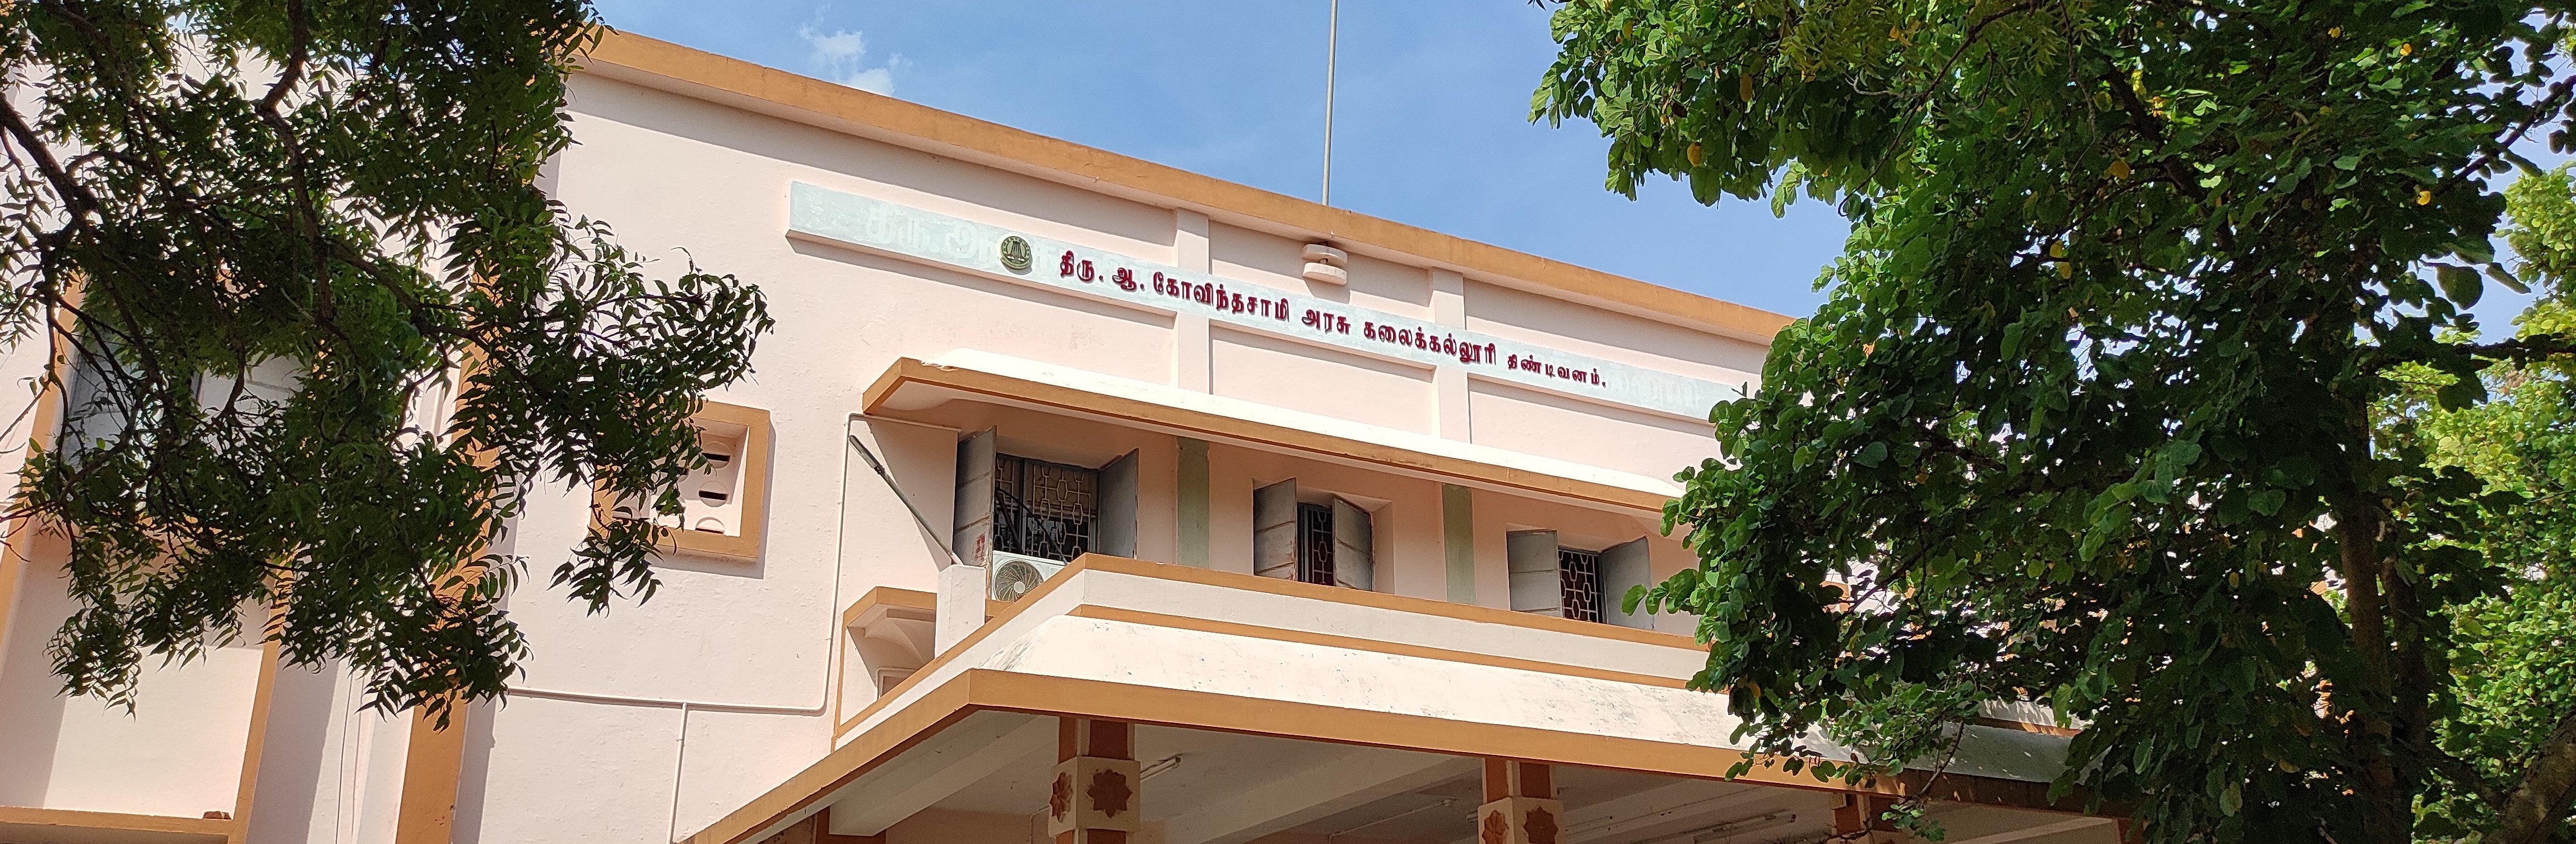 Thiru A. Govindasamy Government Arts College Library